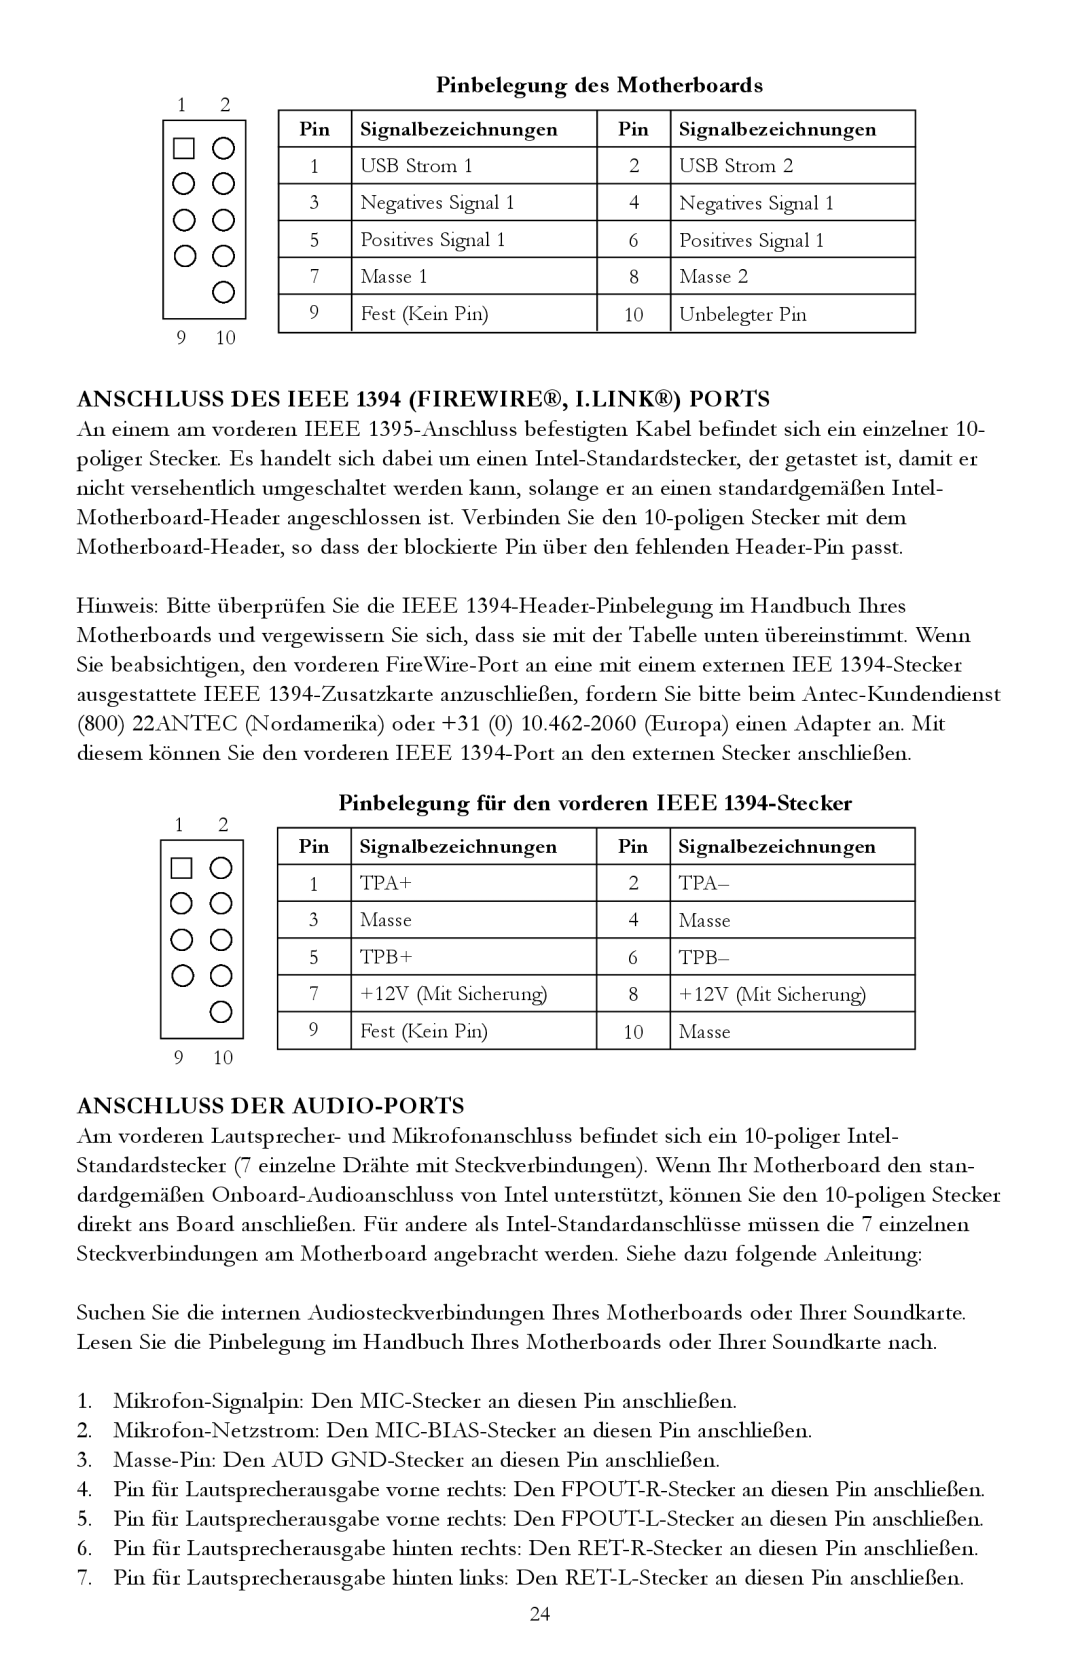 Antec Sonata II Pinbelegung des Motherboards, ANSCHLUSS DES IEEE 1394 FIREWIRE, I.LINK PORTS, Anschluss Der Audio-Ports 